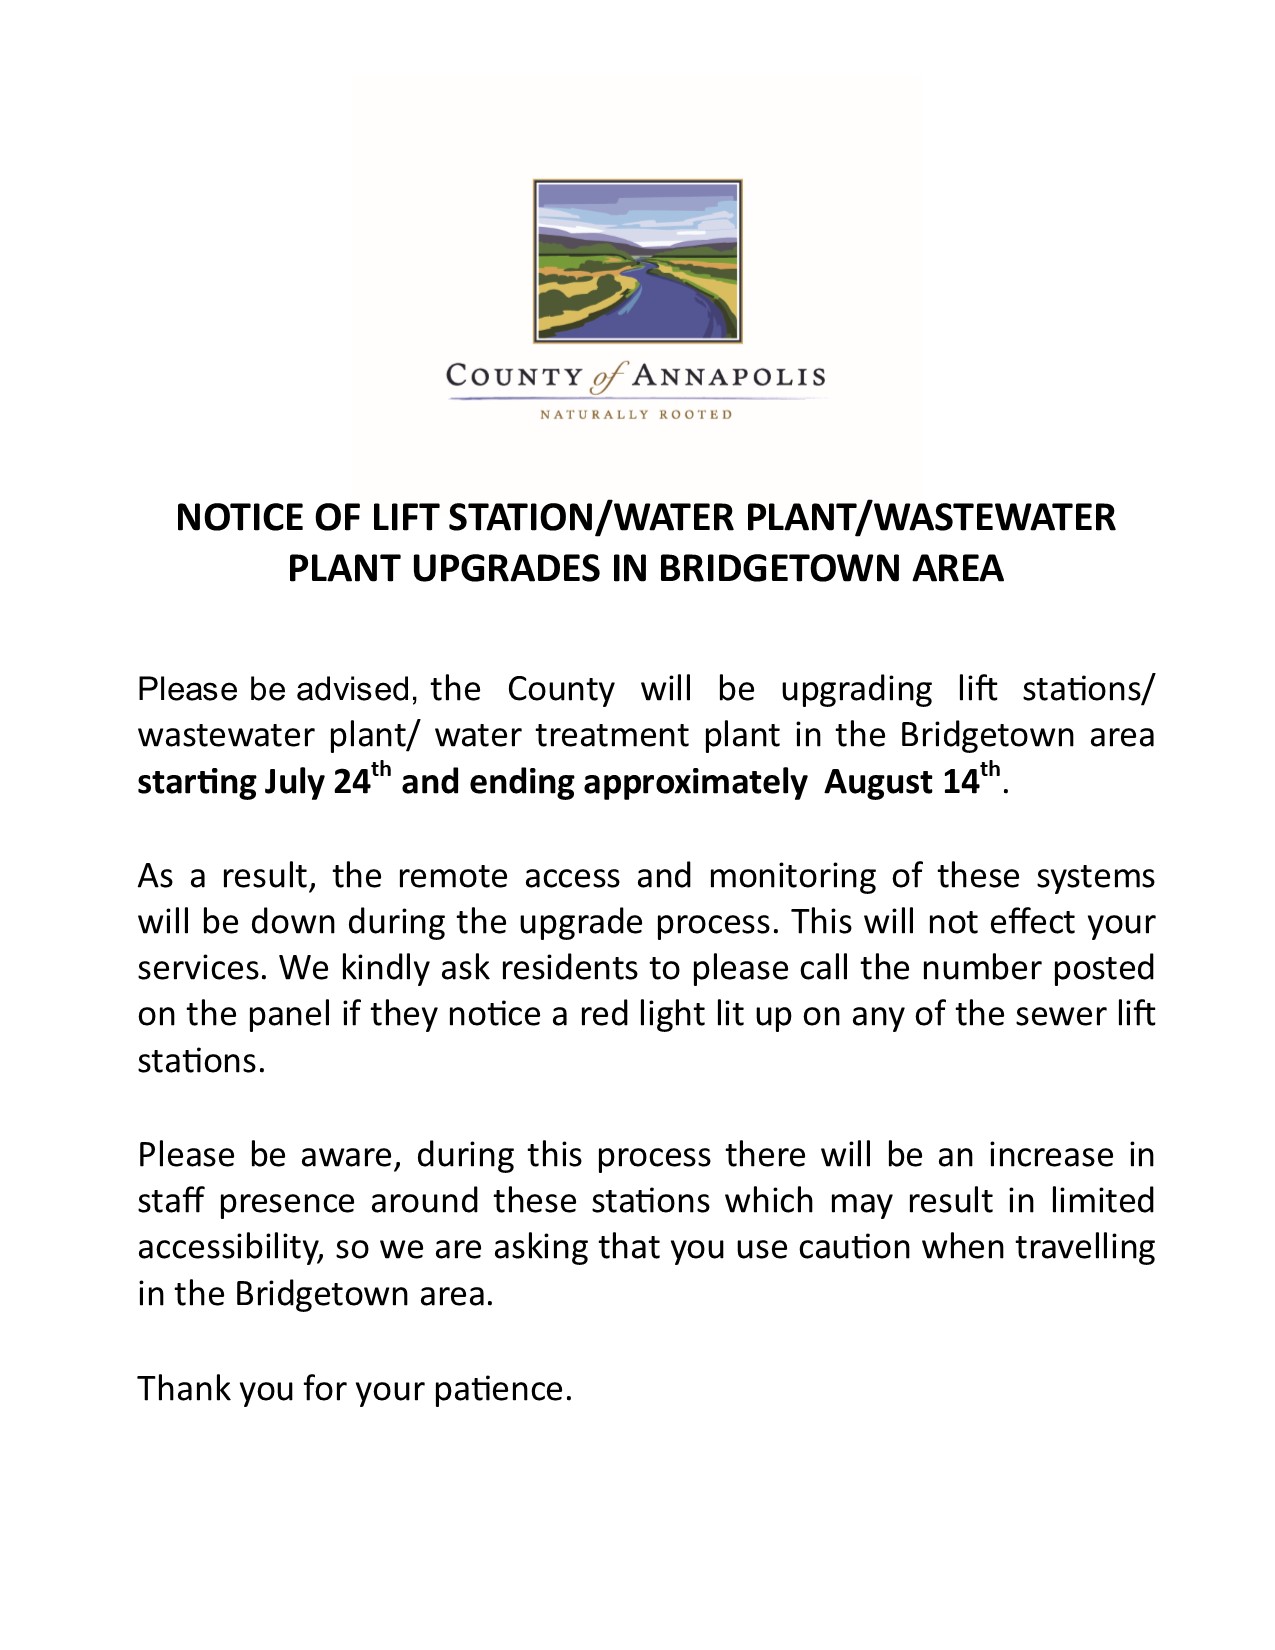 Bridgetown Lift Station Water Plant Wastewater Plant Upgrades July 24 23